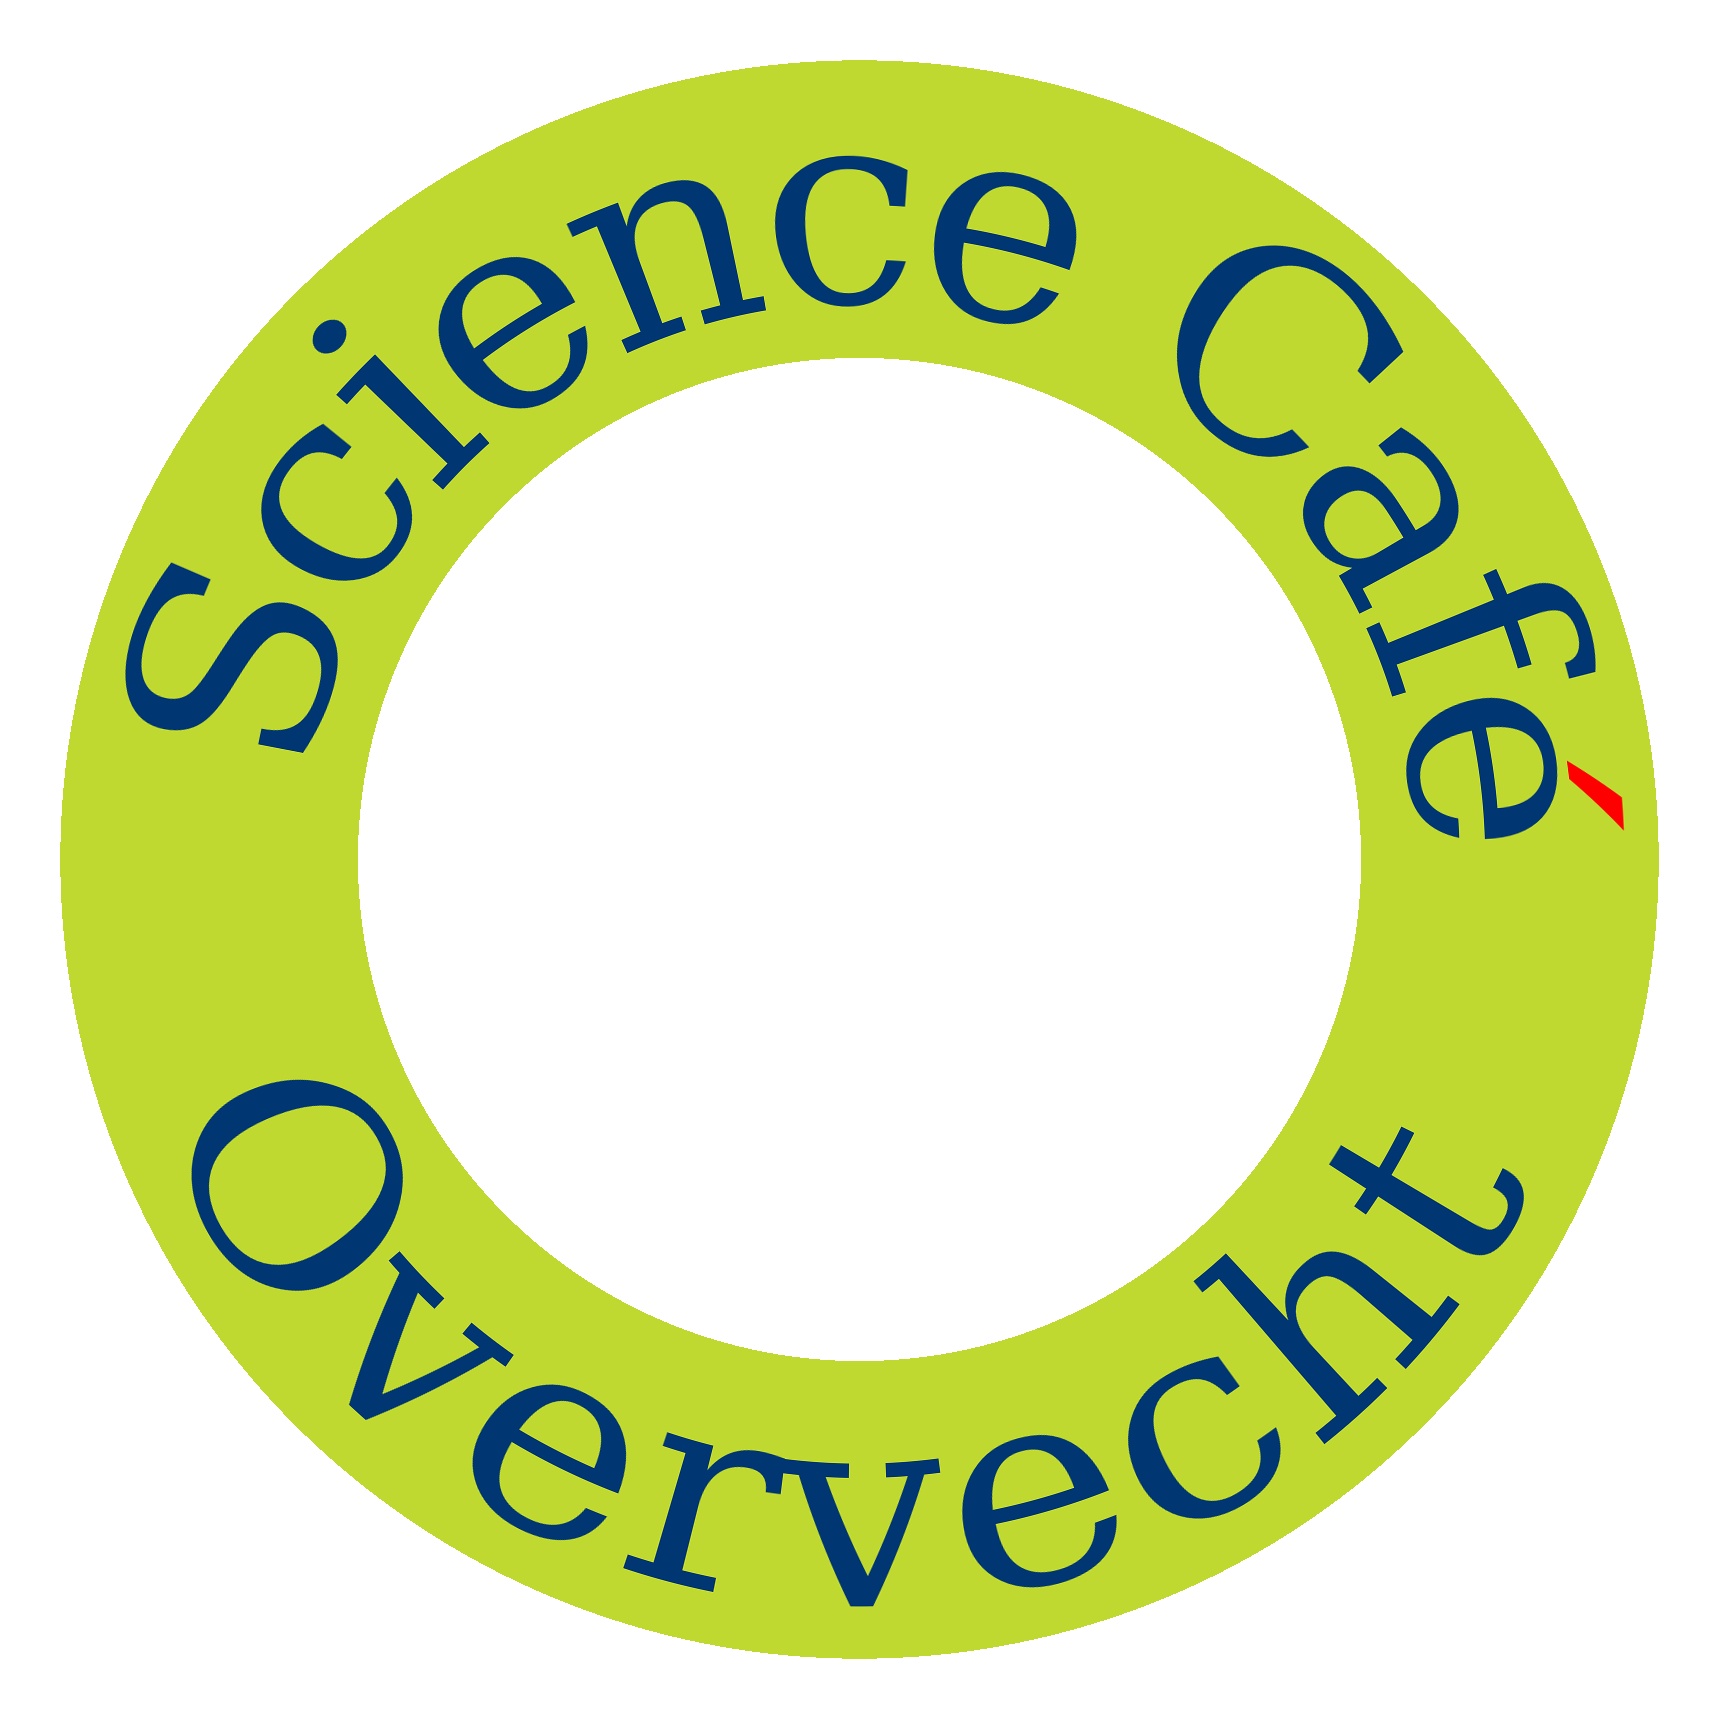 http://www.sciencecafeovervecht.nl/SBM2016/logo-science-cafe-overvecht.jpg